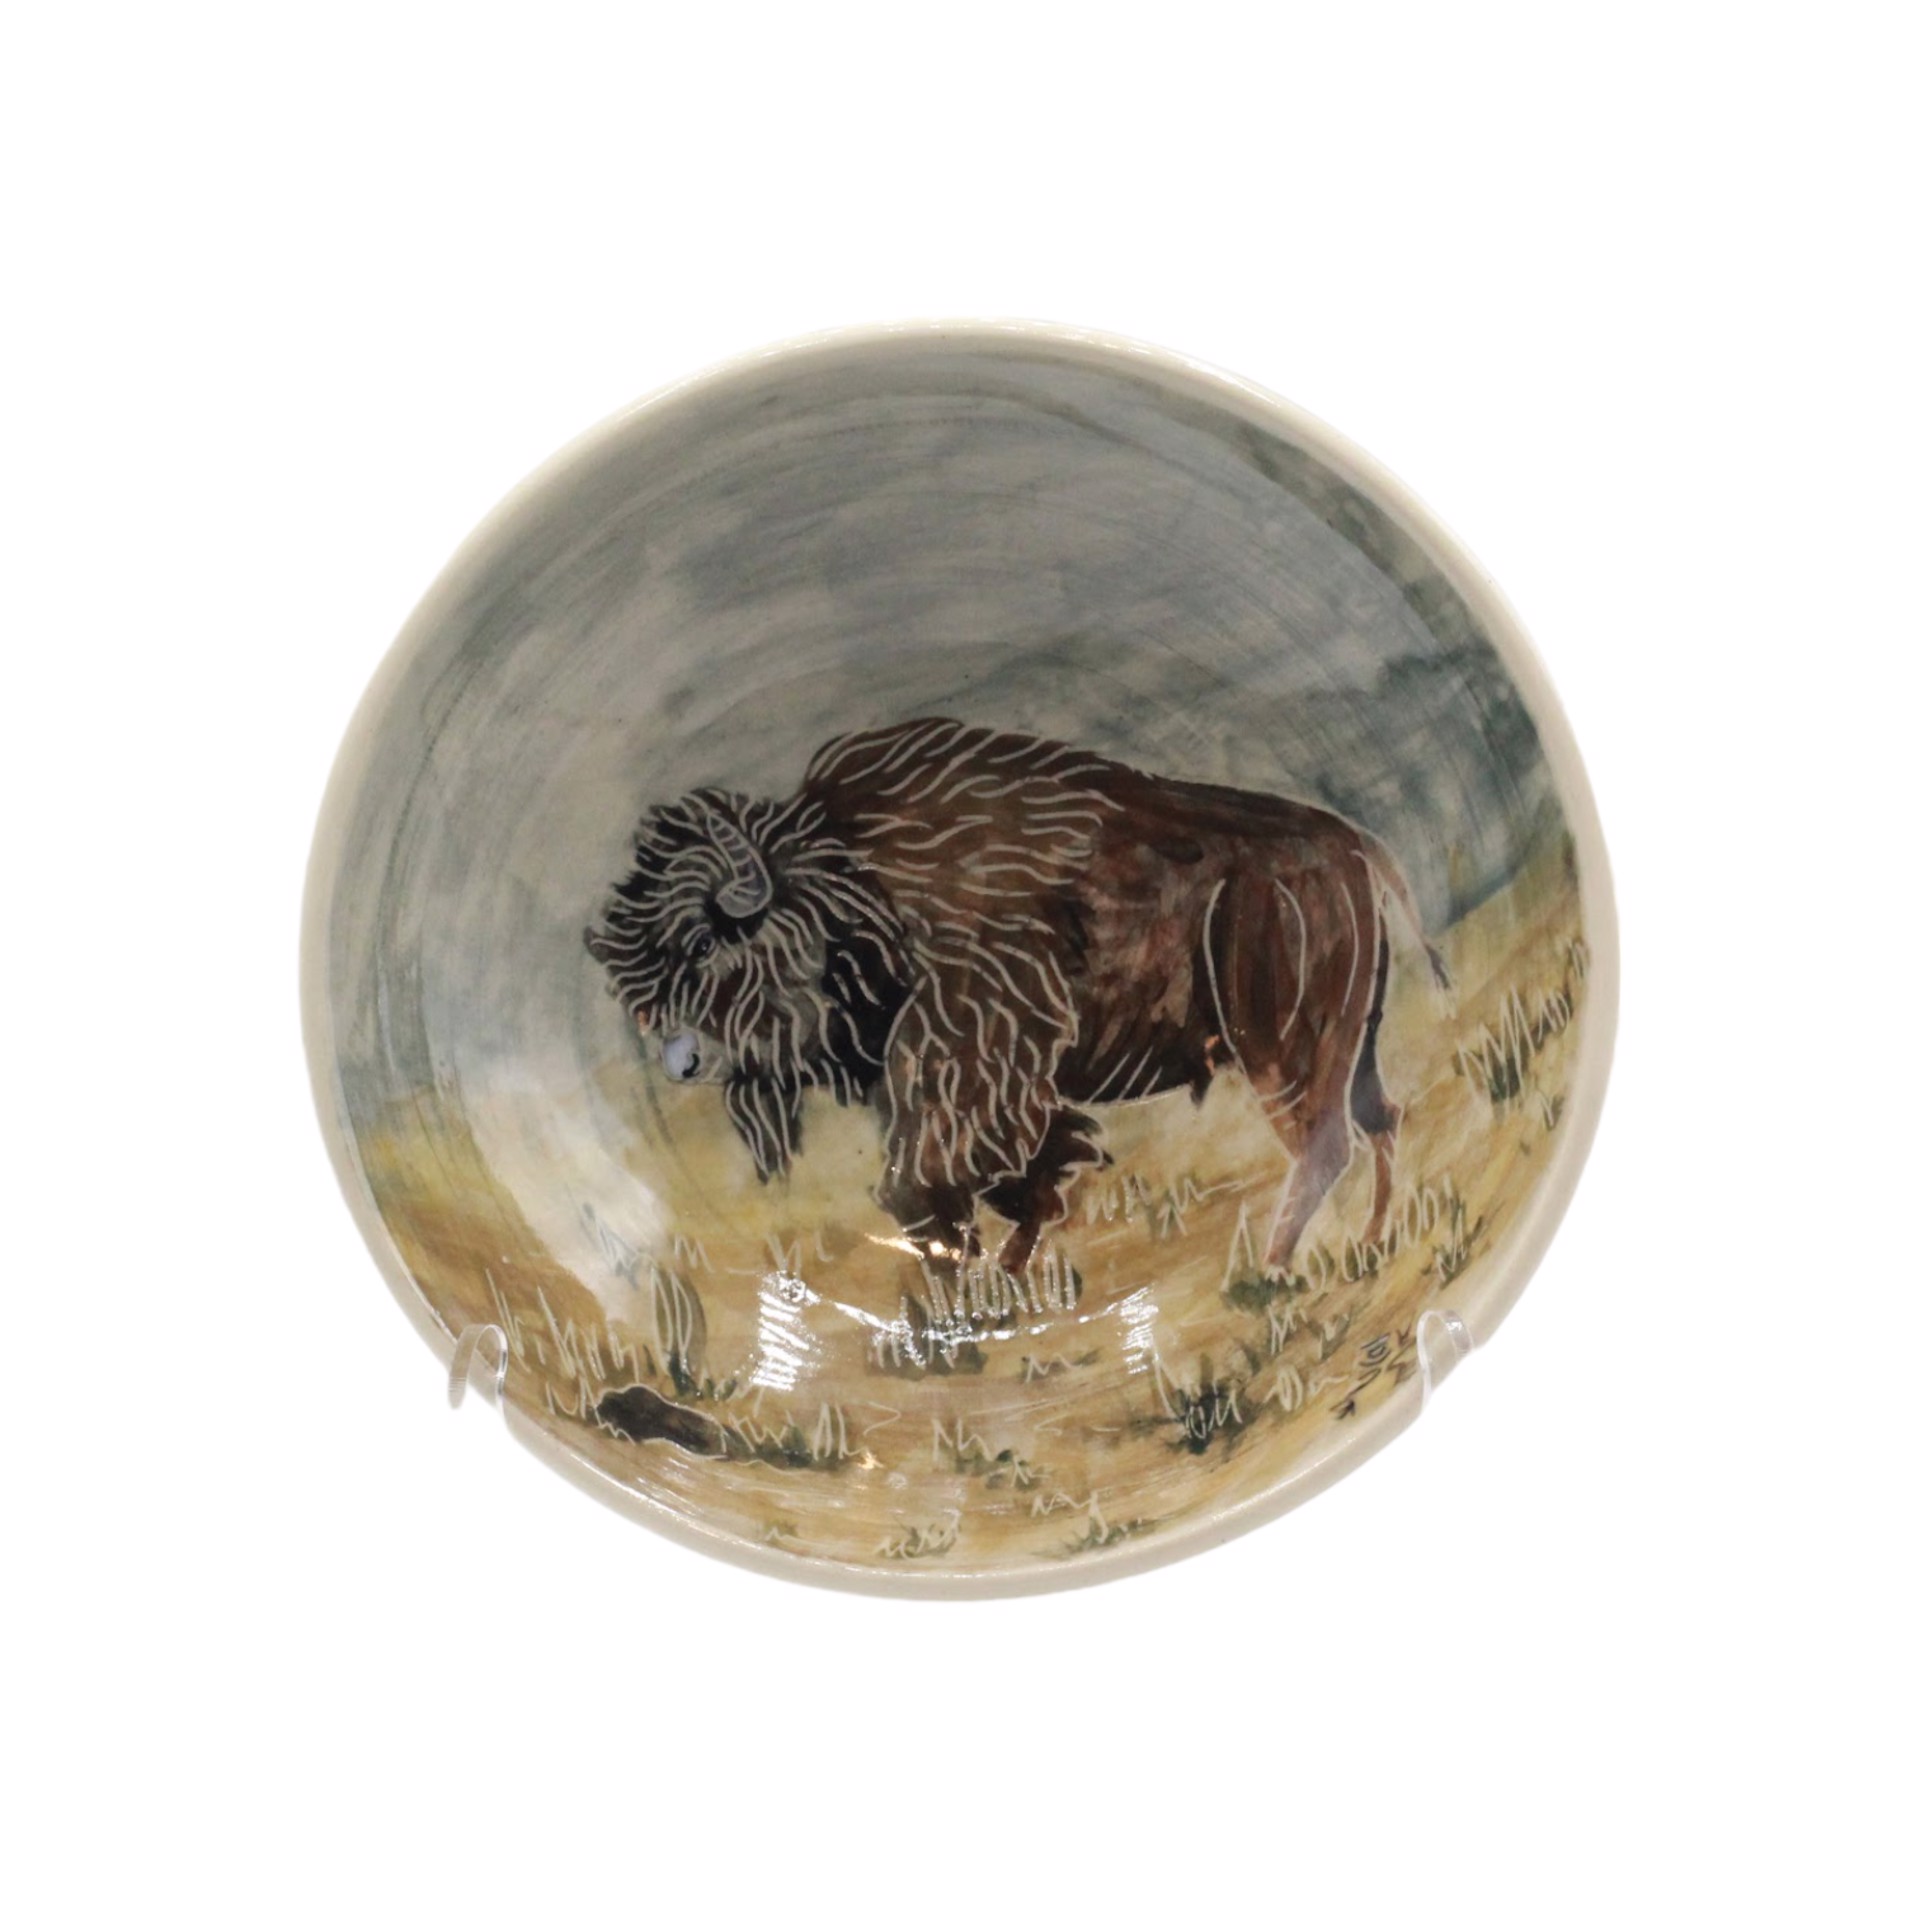 Medium Buffalo Bowl by Kim Filiaggi & Elizabeth Schowachert